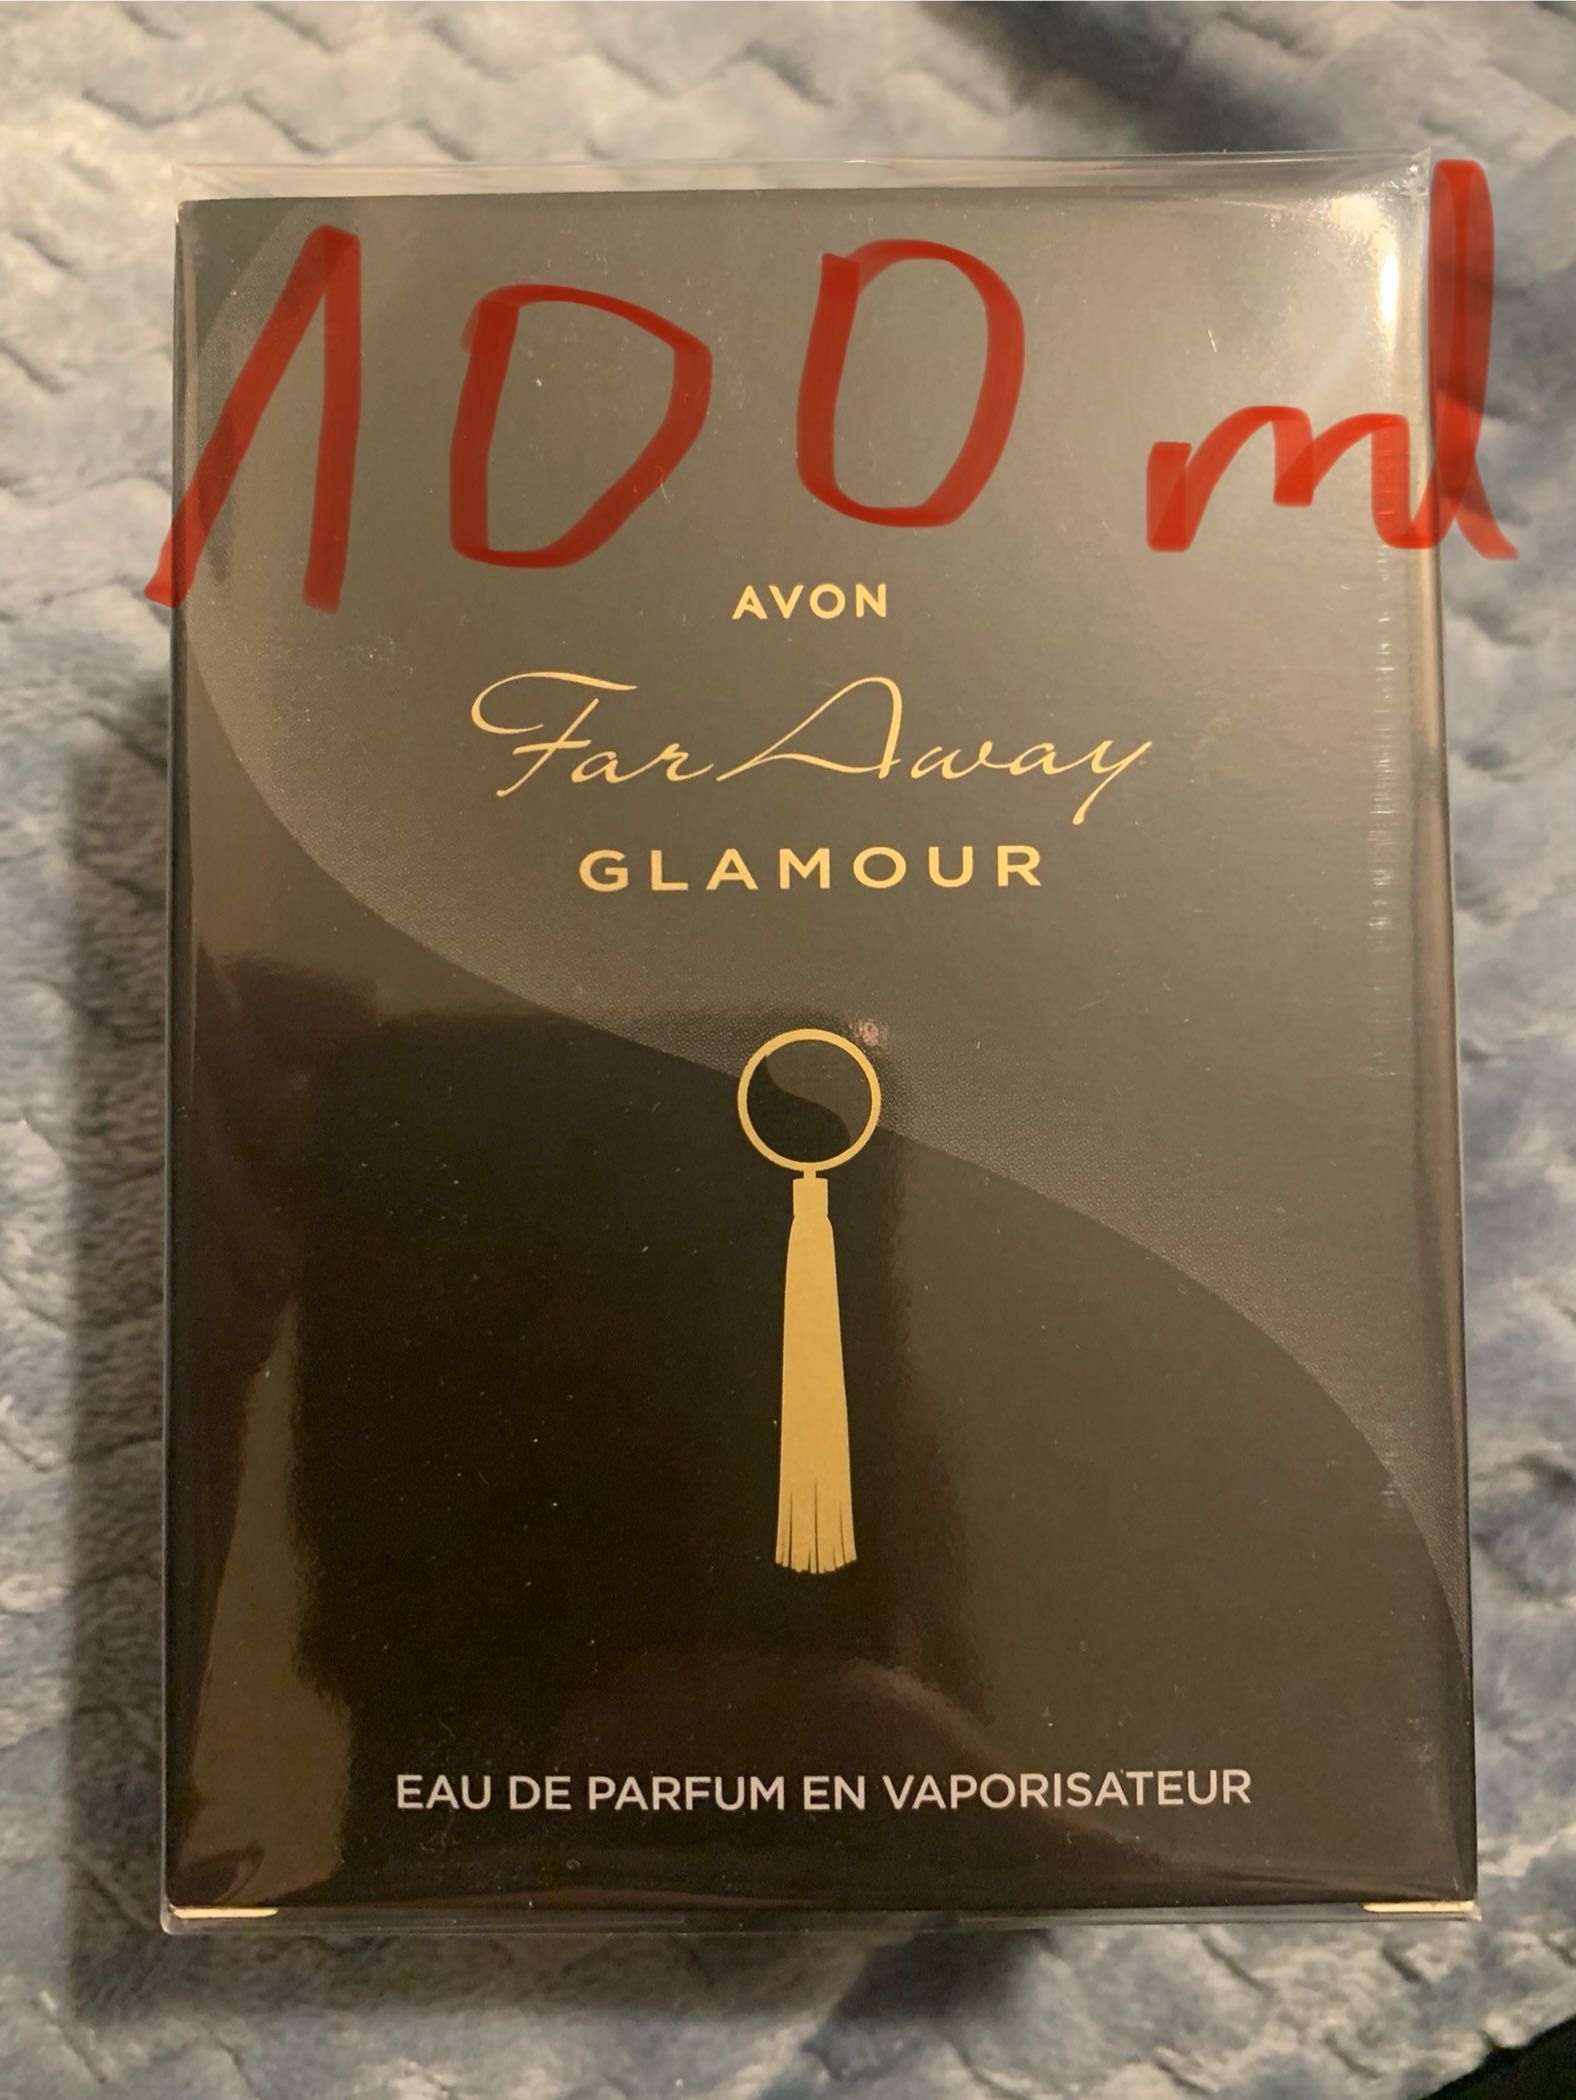 For away glamour Avon 100 ml